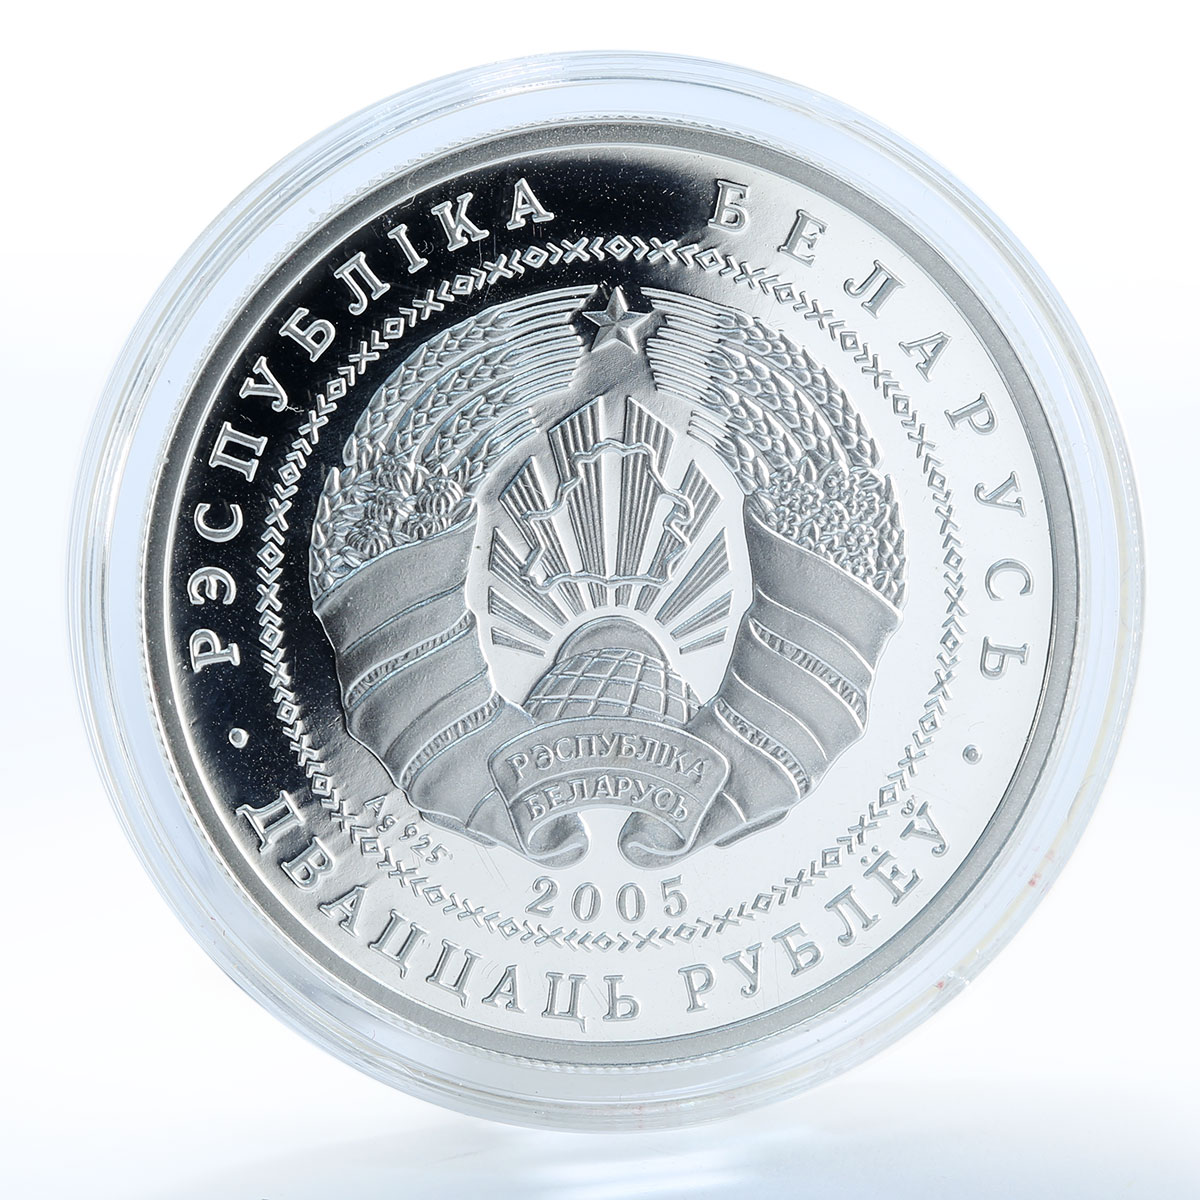 Belarus 20 rubles, Pharny Roman Catholic Church, Nesvizh, silver proof coin 2005